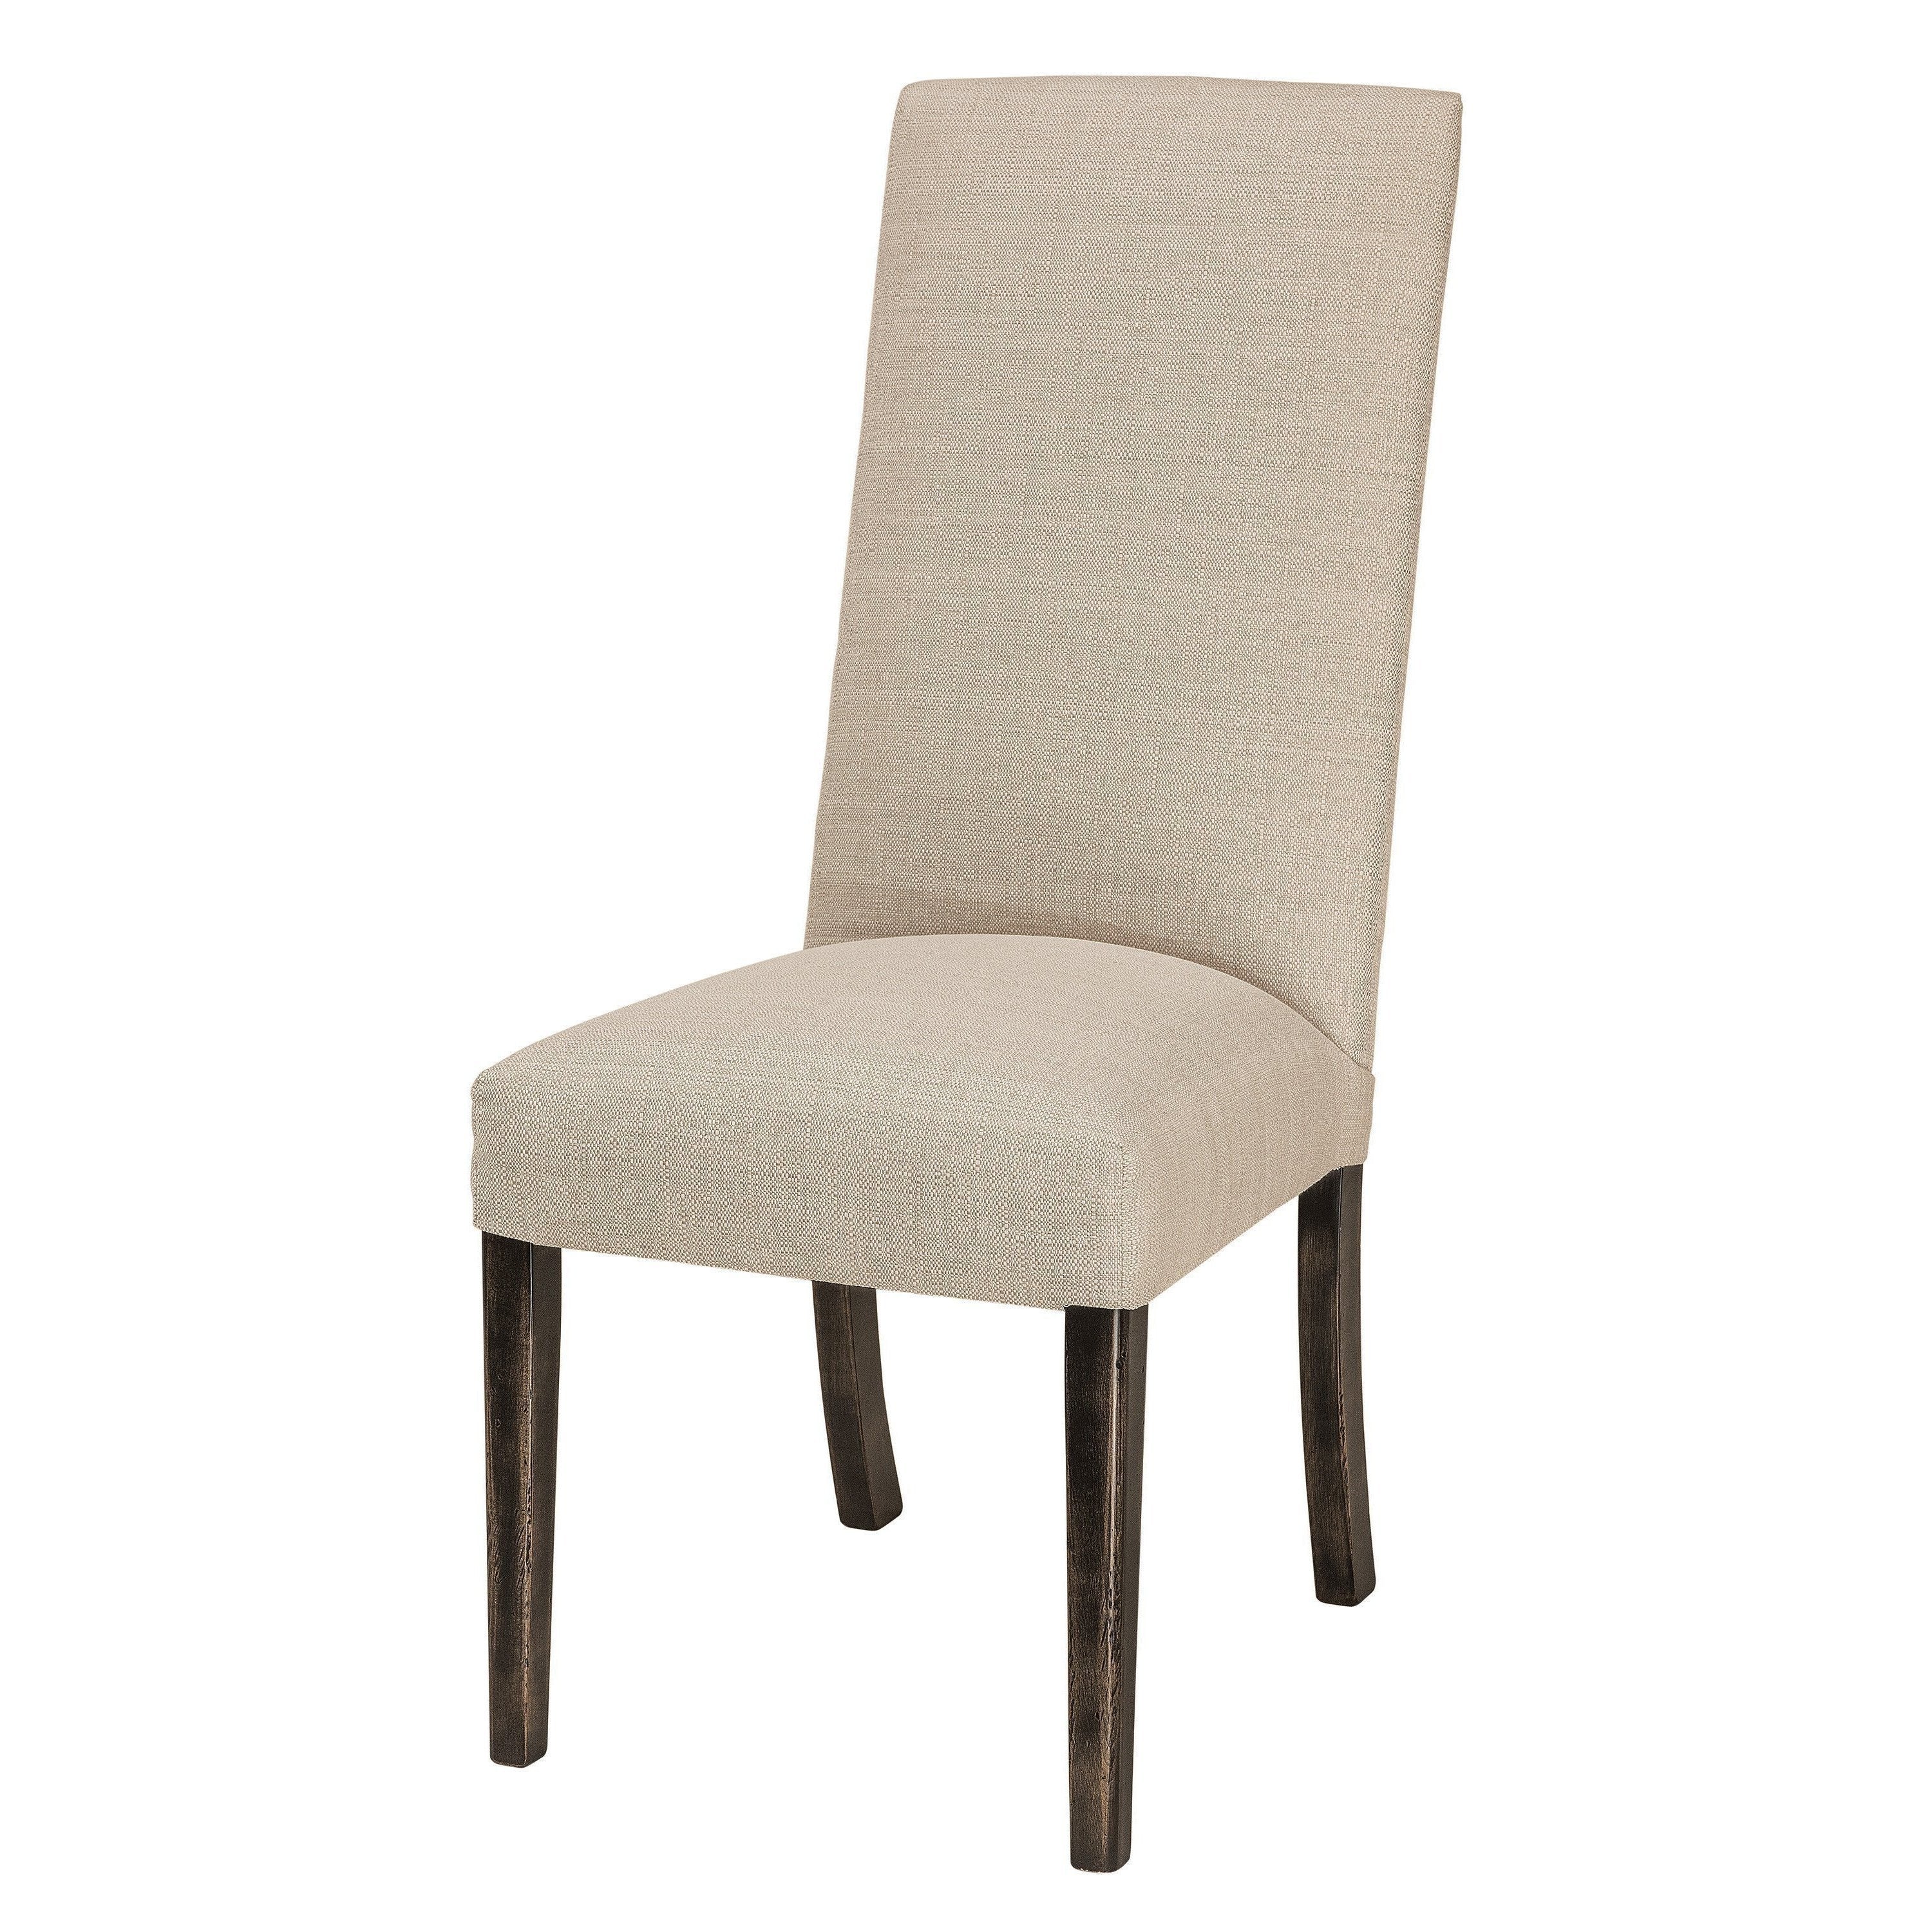 sheldon-side-chair-260307.jpg